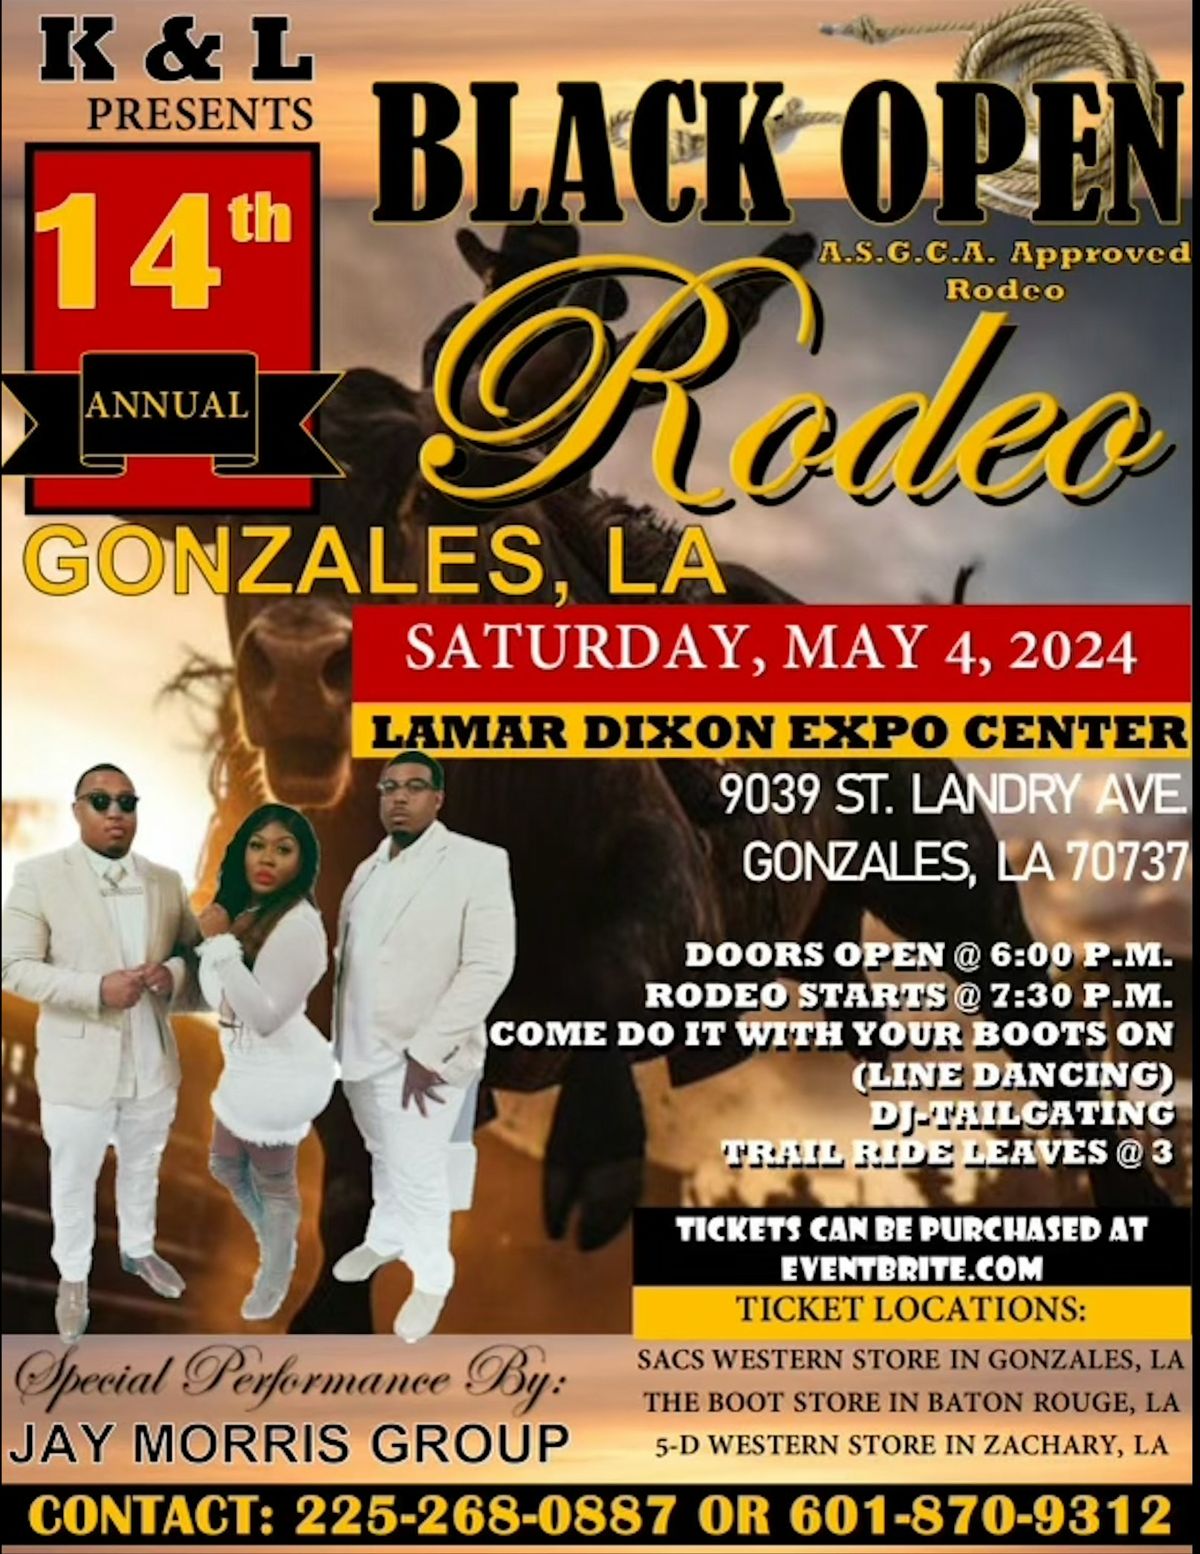 14th Annual Gonzalez, LA Black Open Rodeo